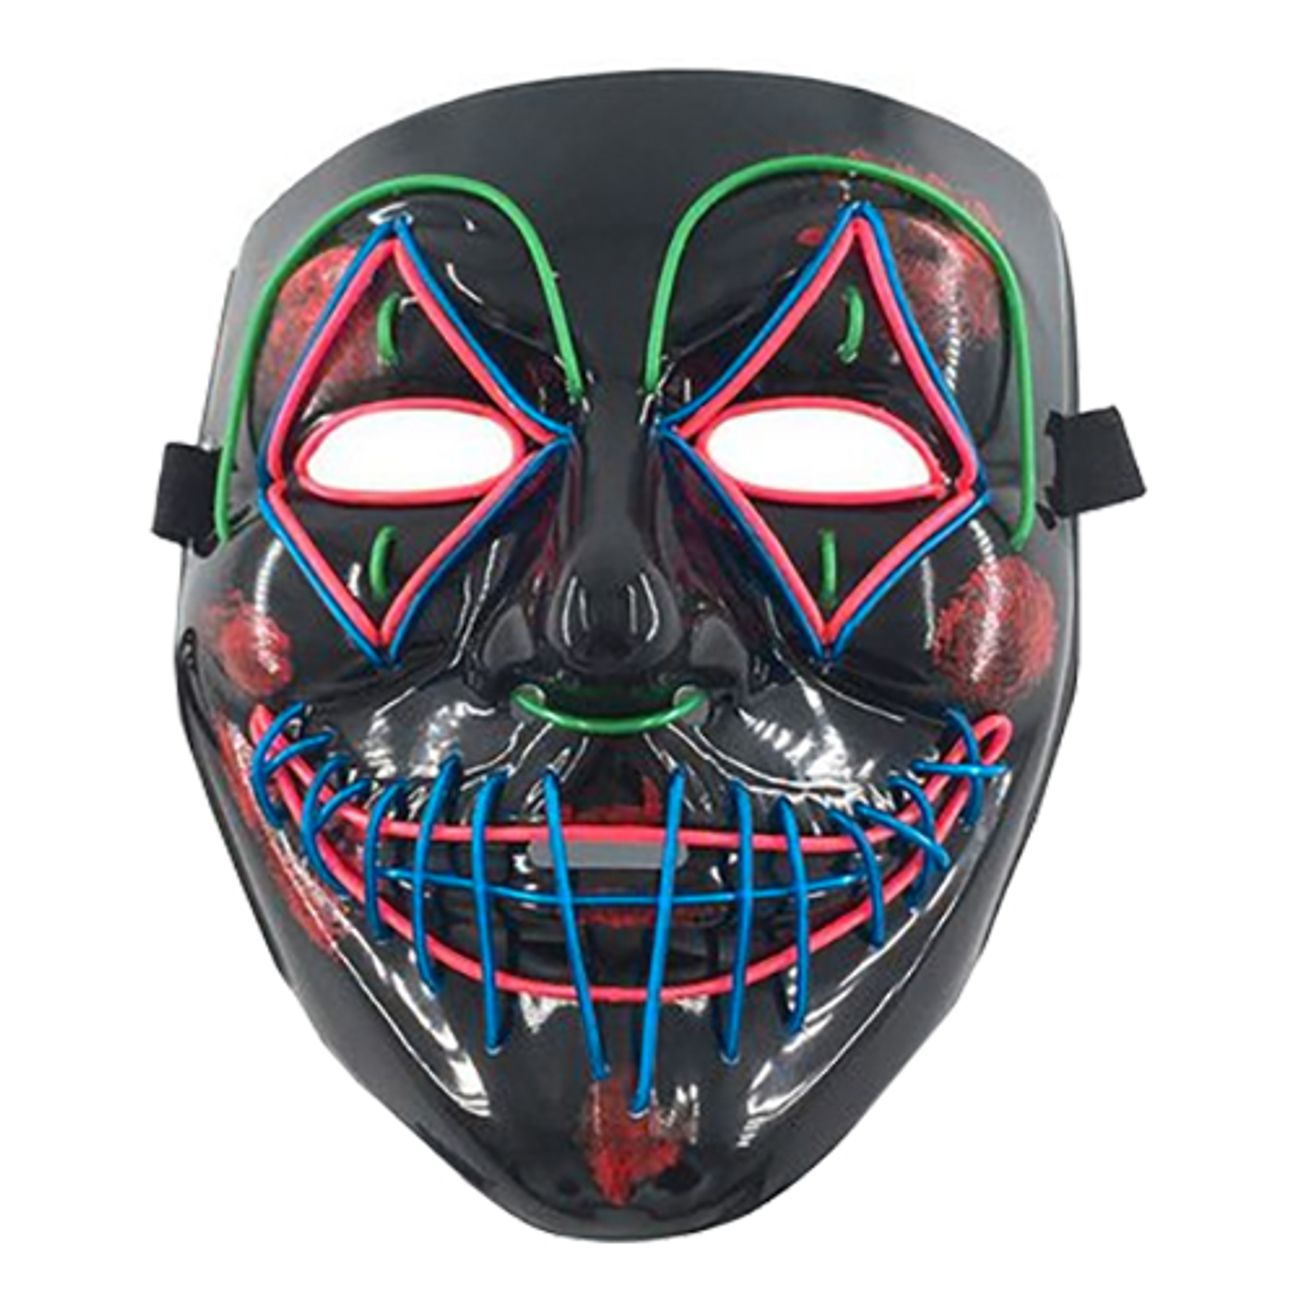 el-wire-joker-led-mask-73225-3